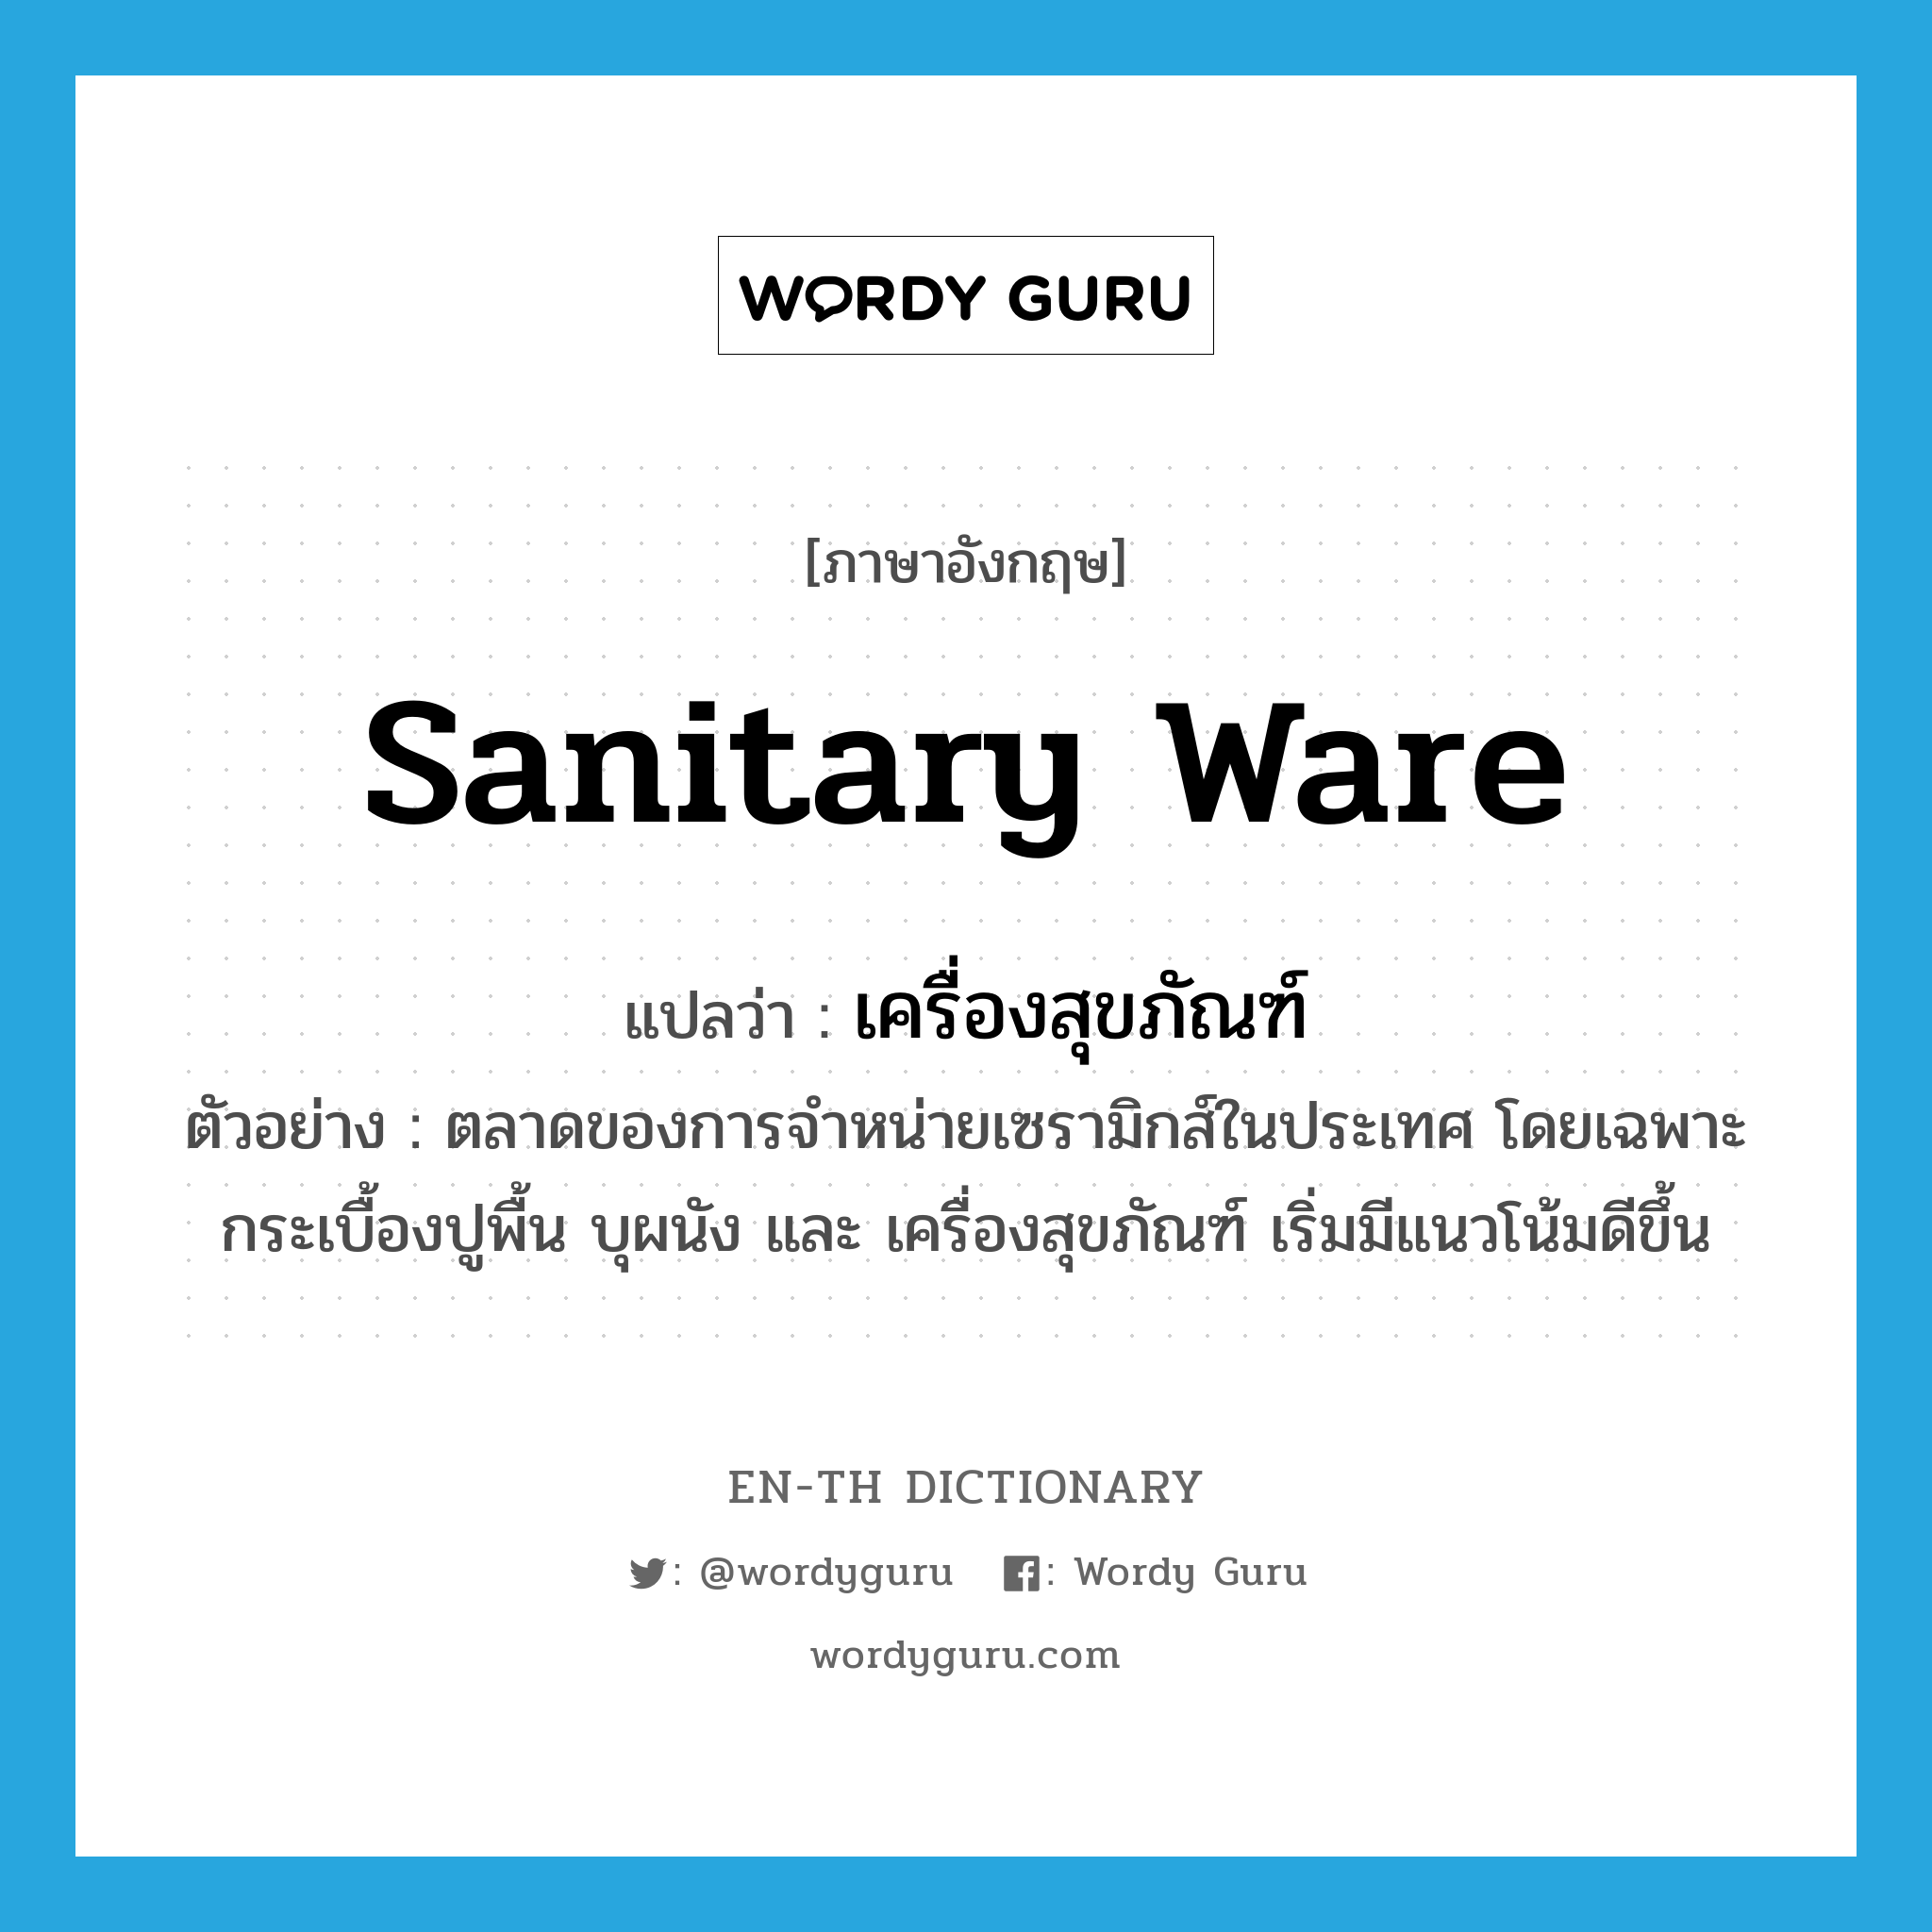 sanitary ware แปลว่า?, คำศัพท์ภาษาอังกฤษ sanitary ware แปลว่า เครื่องสุขภัณฑ์ ประเภท N ตัวอย่าง ตลาดของการจำหน่ายเซรามิกส์ในประเทศ โดยเฉพาะกระเบื้องปูพื้น บุผนัง และ เครื่องสุขภัณฑ์ เริ่มมีแนวโน้มดีขึ้น หมวด N